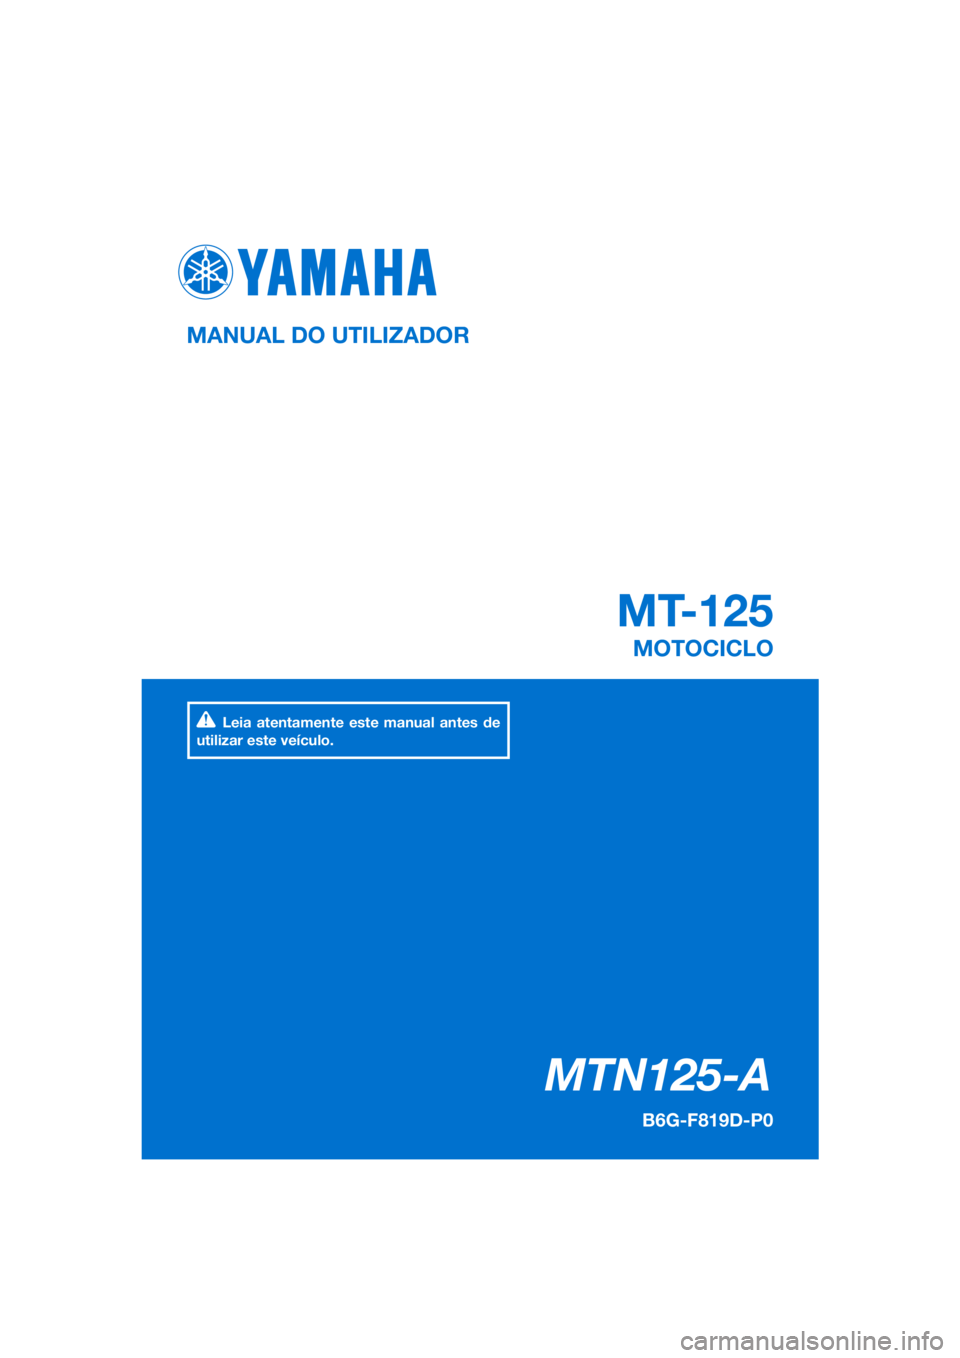 YAMAHA MT-125 2020  Manual de utilização (in Portuguese) PANTONE285C
MTN125-A
MT-125
MANUAL DO UTILIZADOR
B6G-F819D-P0
MOTOCICLO
Leia atentamente este manual antes de 
utilizar este veículo.
[Portuguese  (P)] 